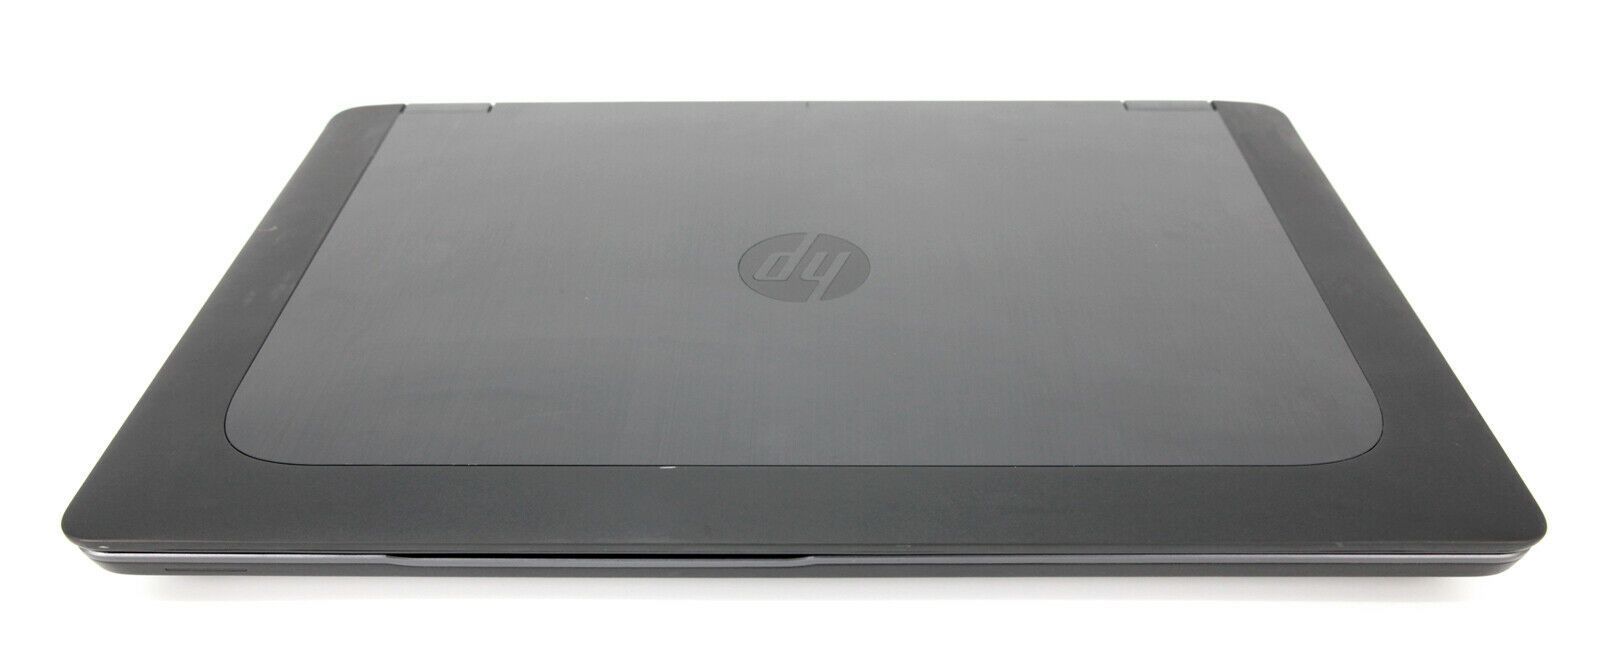 HP ZBook 15 G2 Laptop: 32GB RAM, 4th Gen Core i7, 256GB + HDD, Warranty, VAT - CruiseTech